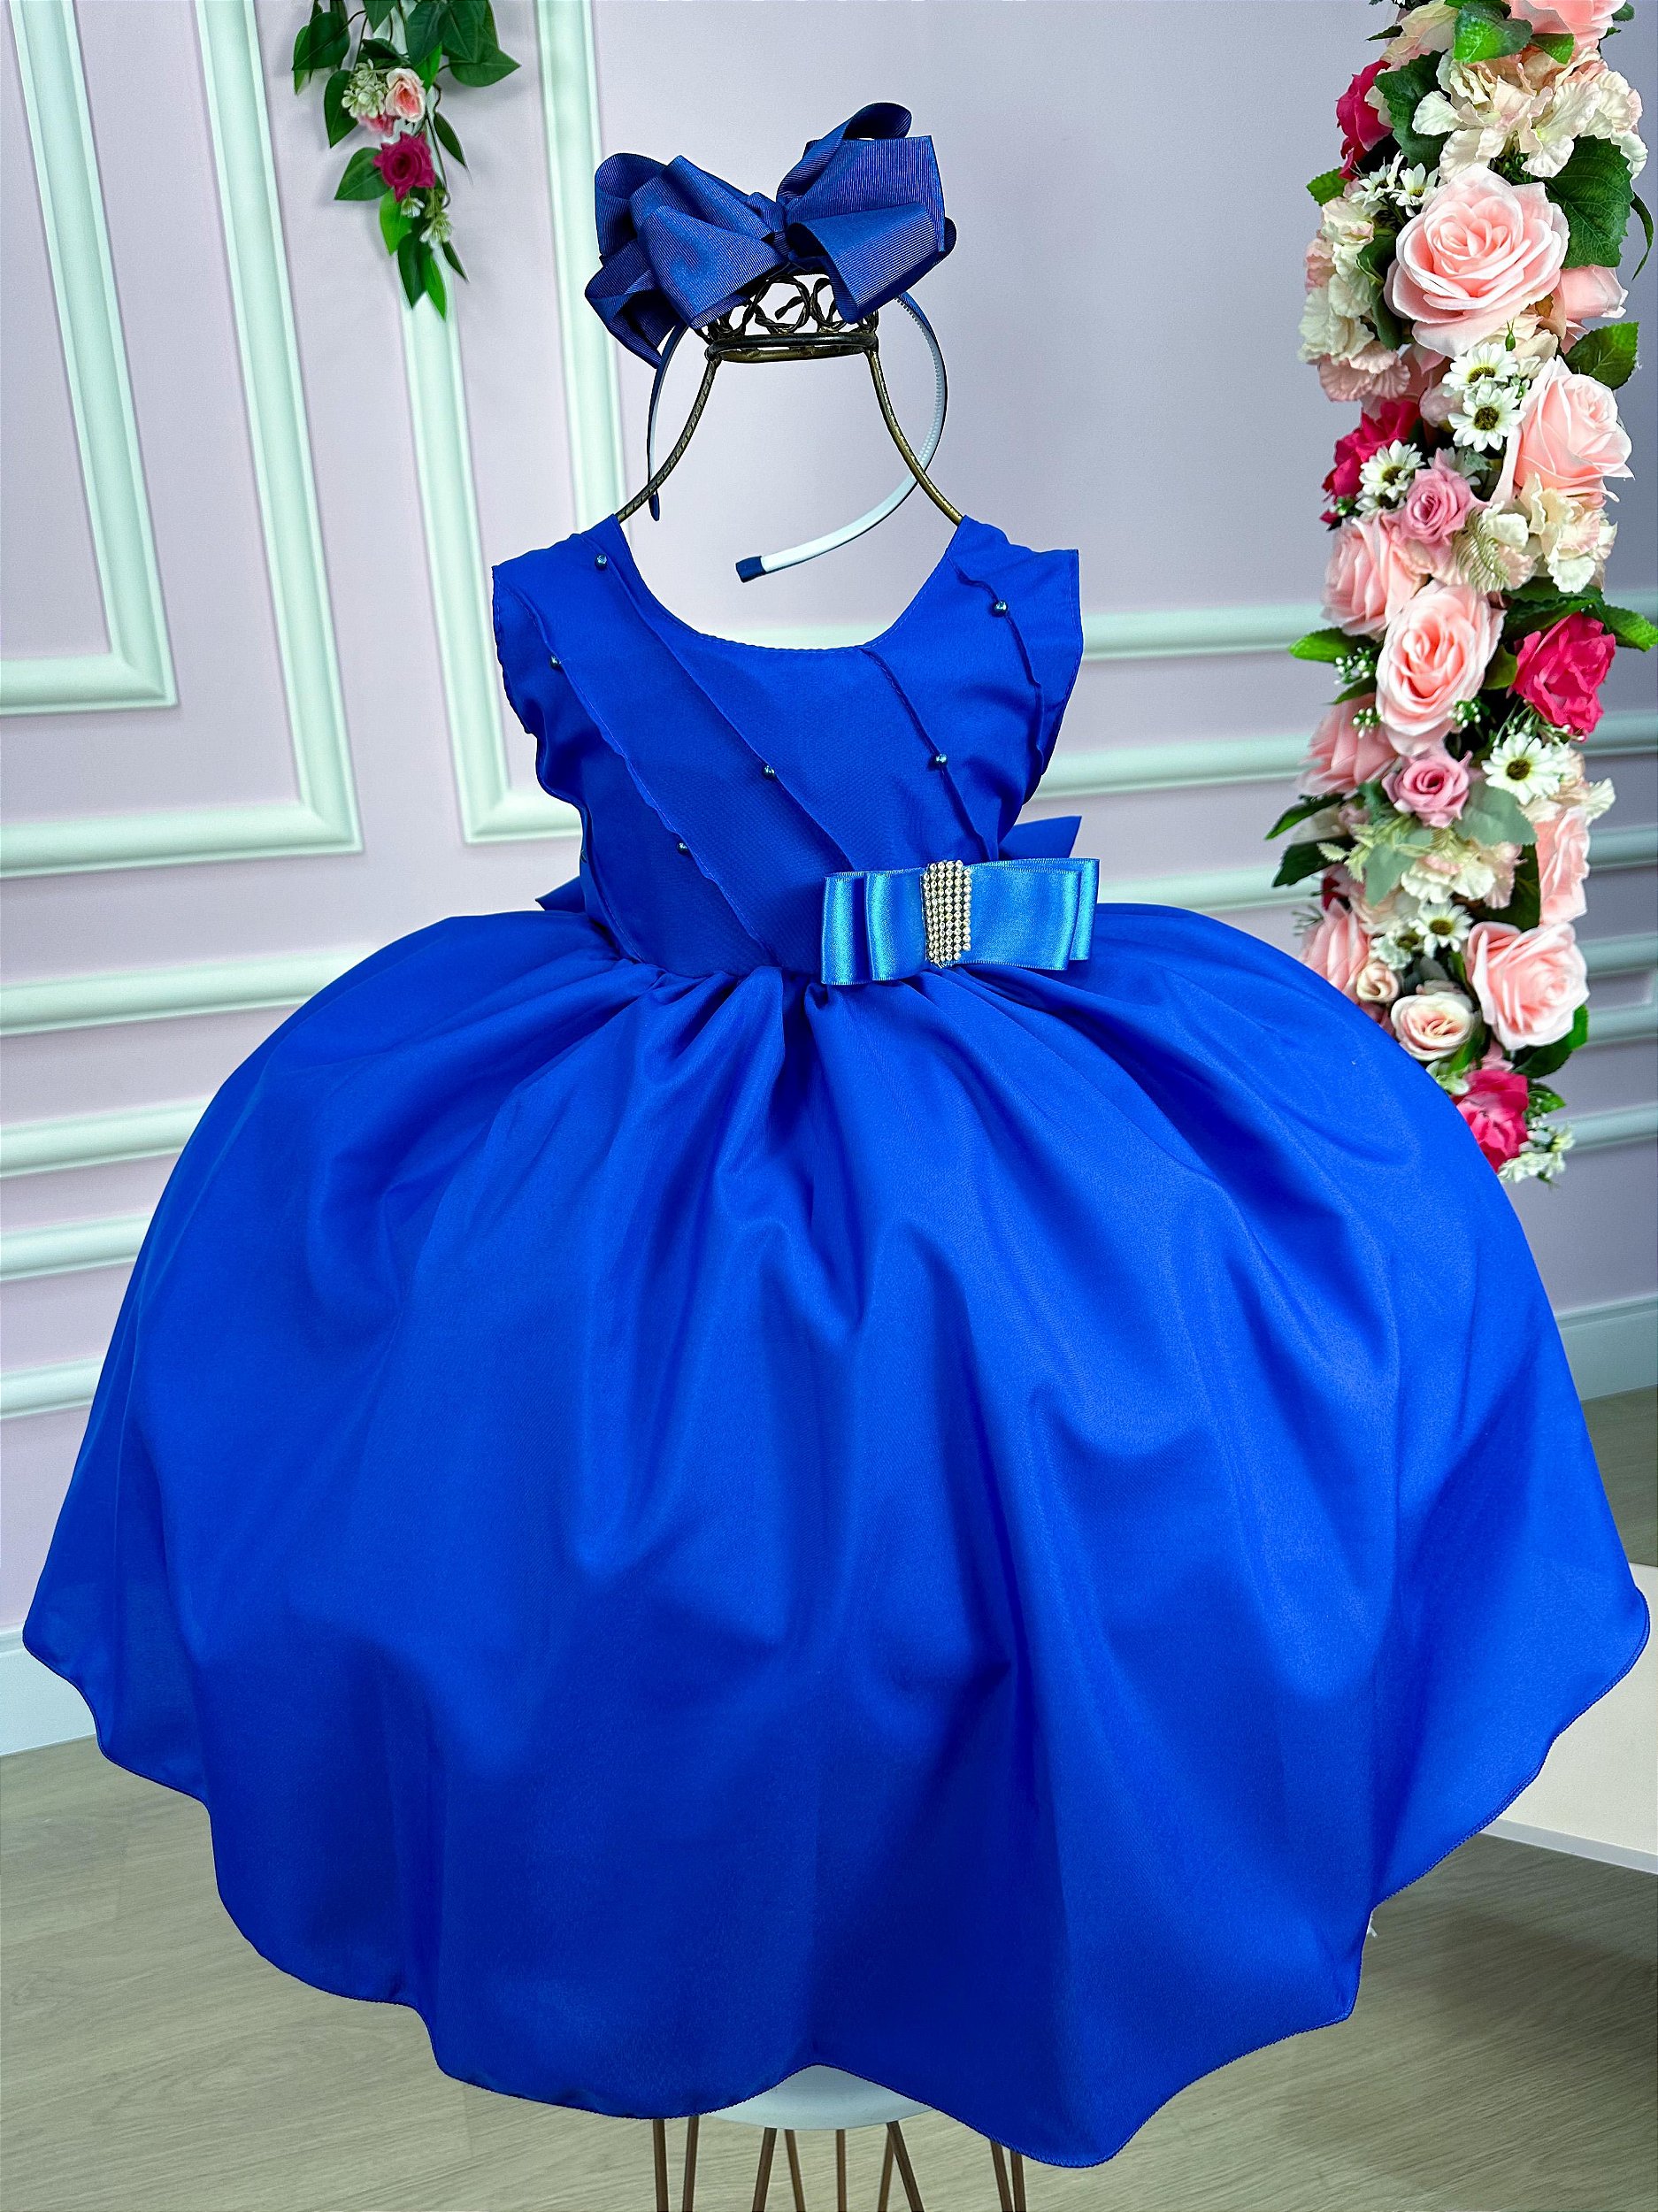 Vestido de Festa Infantl feminino Azul Royal Rodado - Frete Grátis - Roupa  Infantil|Lemelon Moda Infantil e Bebê